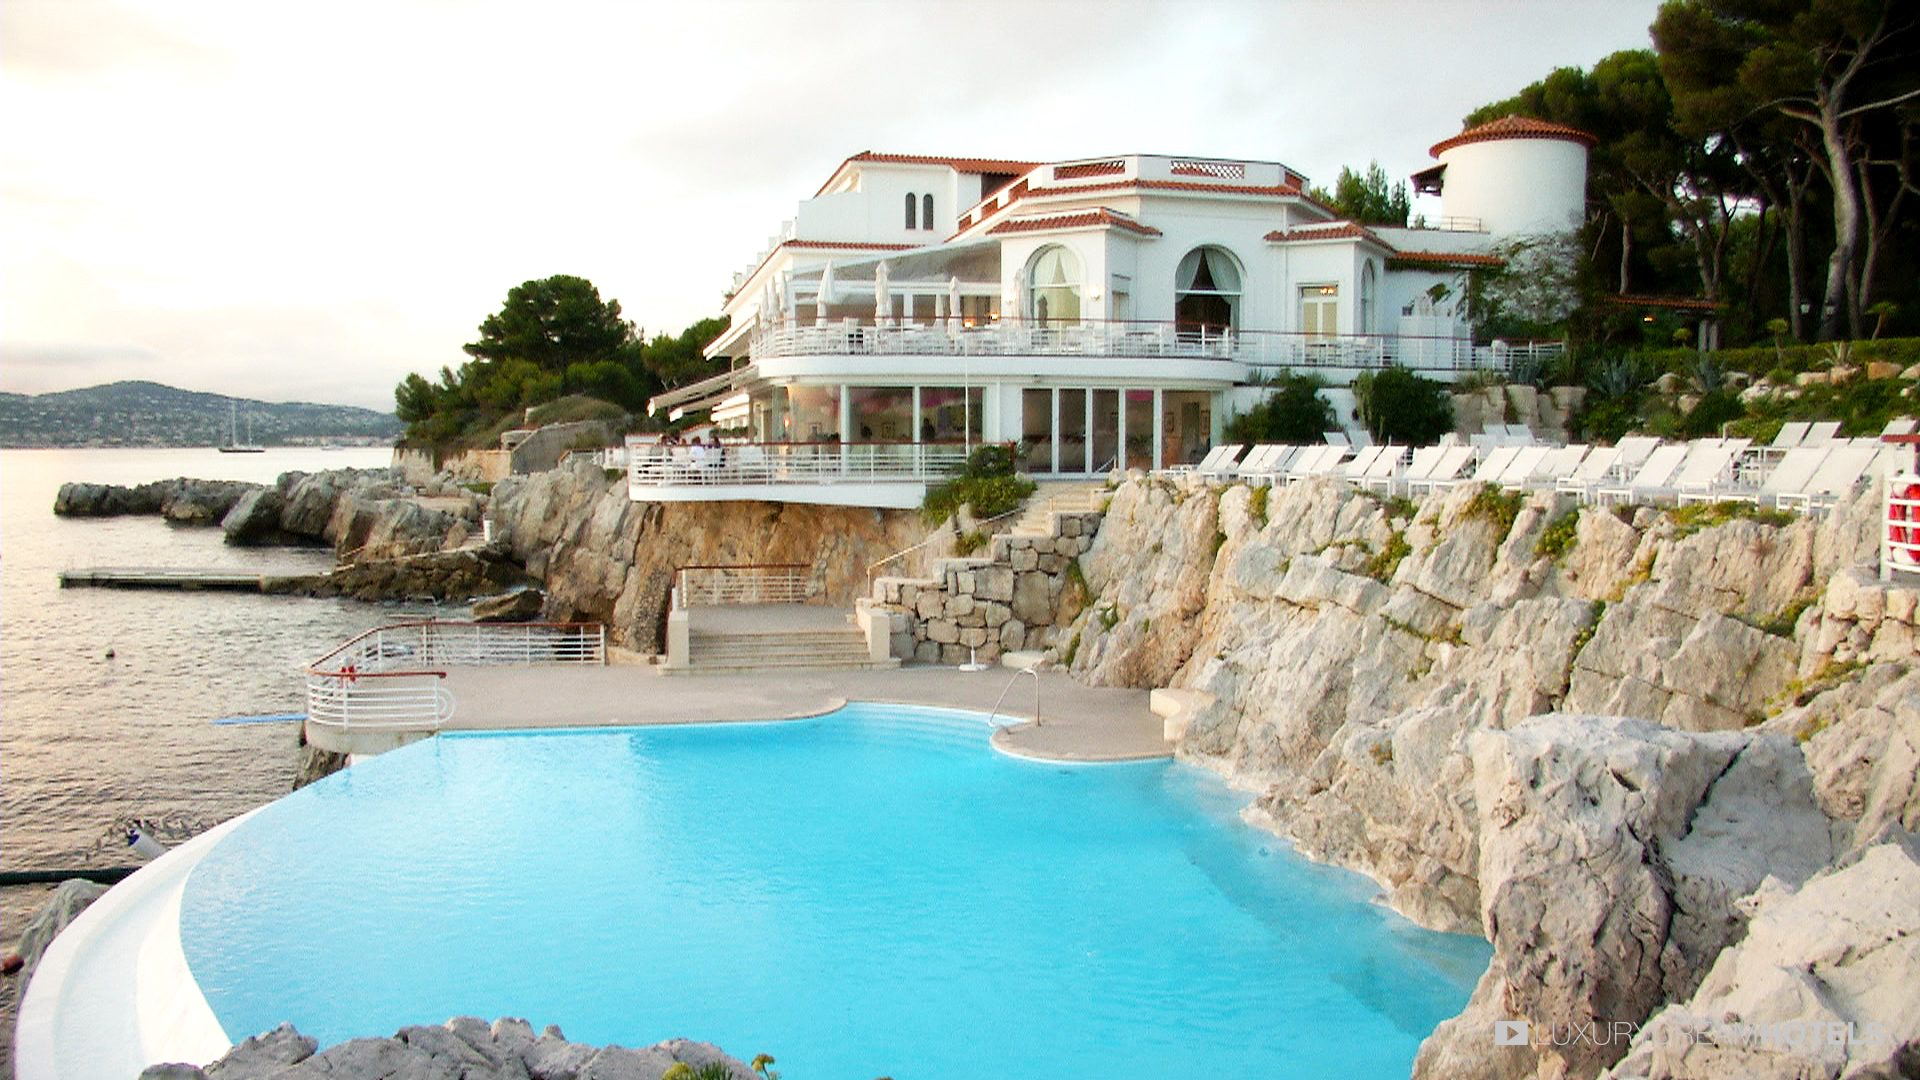 Delegation Picasso udvikling Luxury hotel, Hotel du Cap-Eden-Roc, Cap d'Antibe, France - Luxury Dream  Hotels